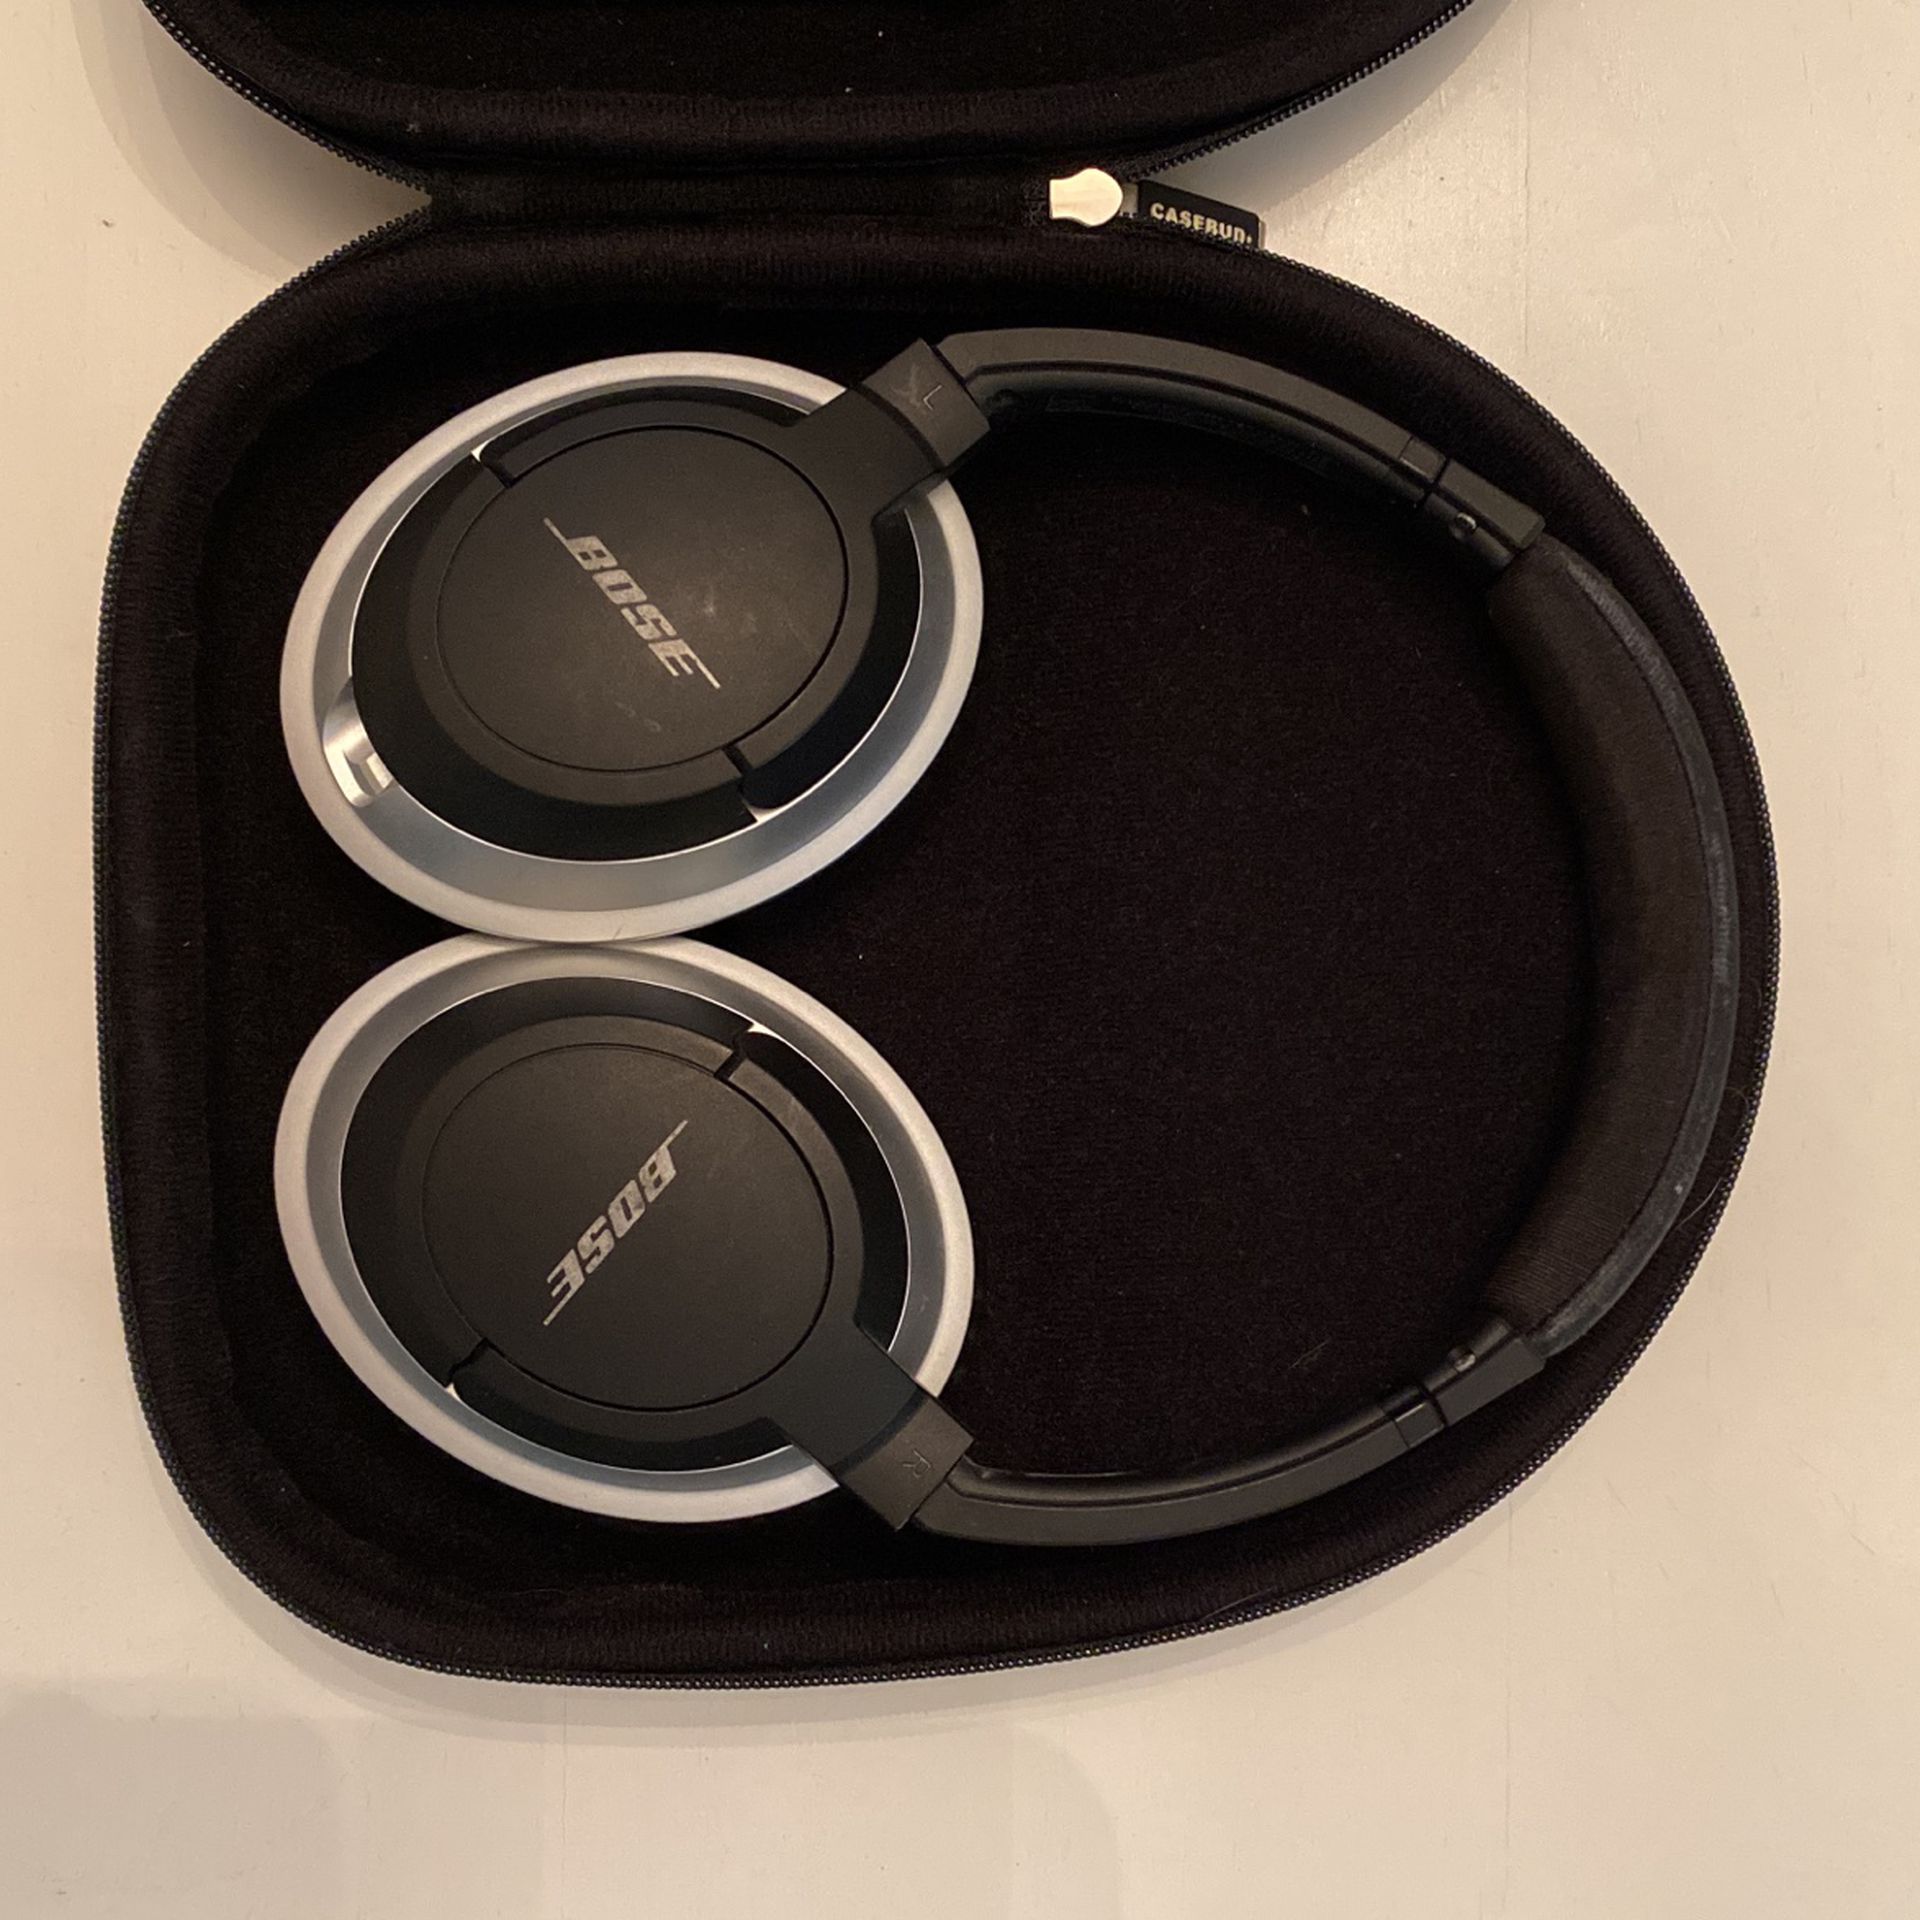 Bose AE2 Headphones for in Philadelphia, PA - OfferUp